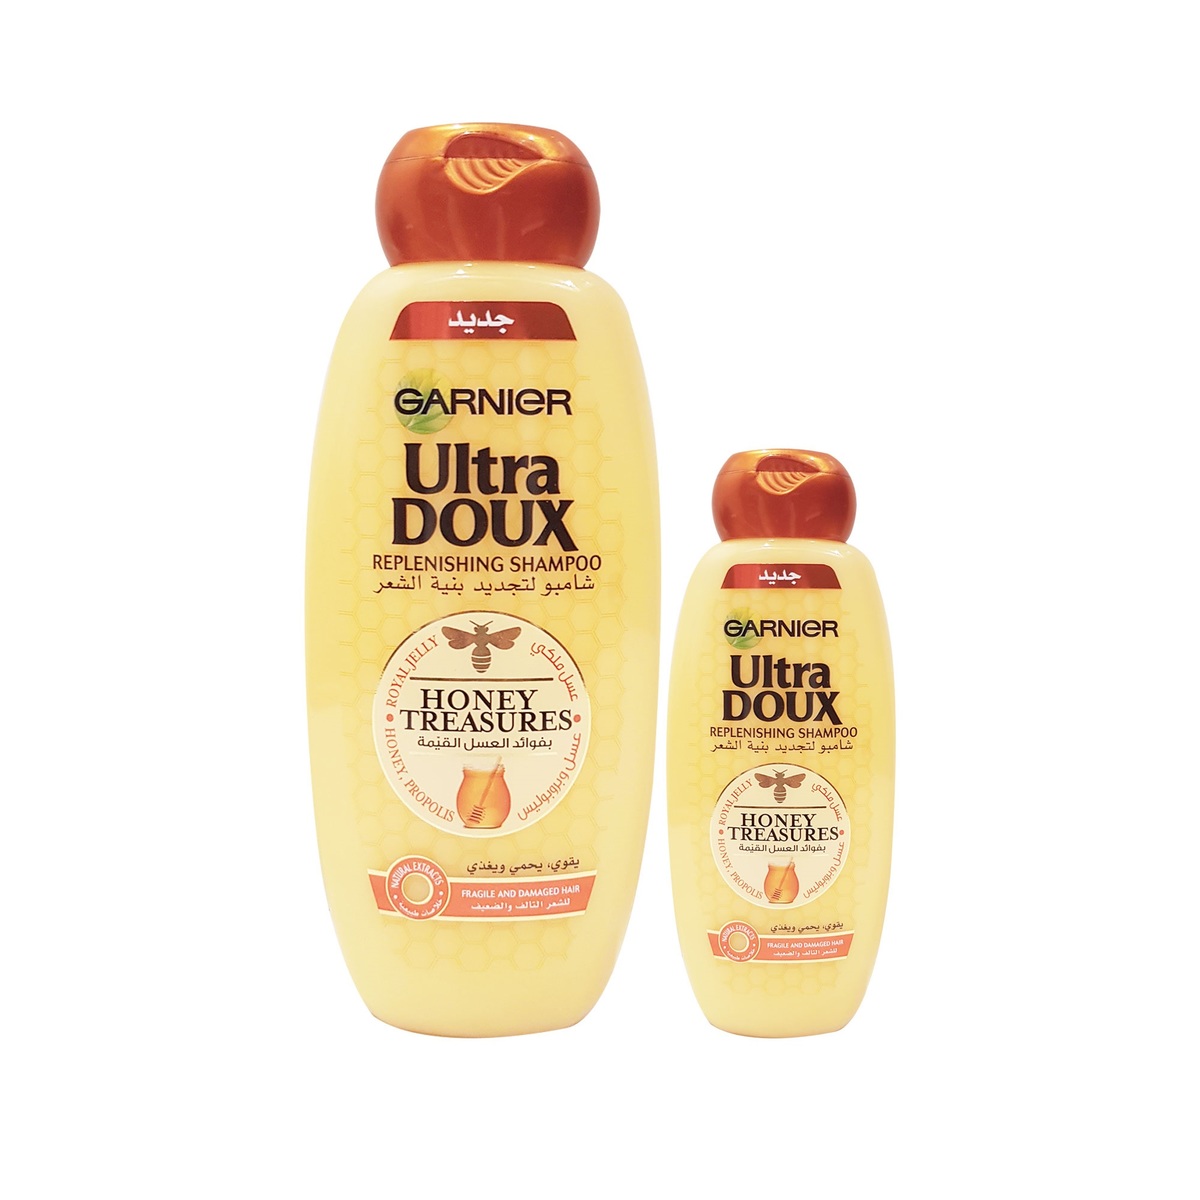 Garnier Ultra Doux Honey Tressures Replenishing Shampoo 400ml + 200ml